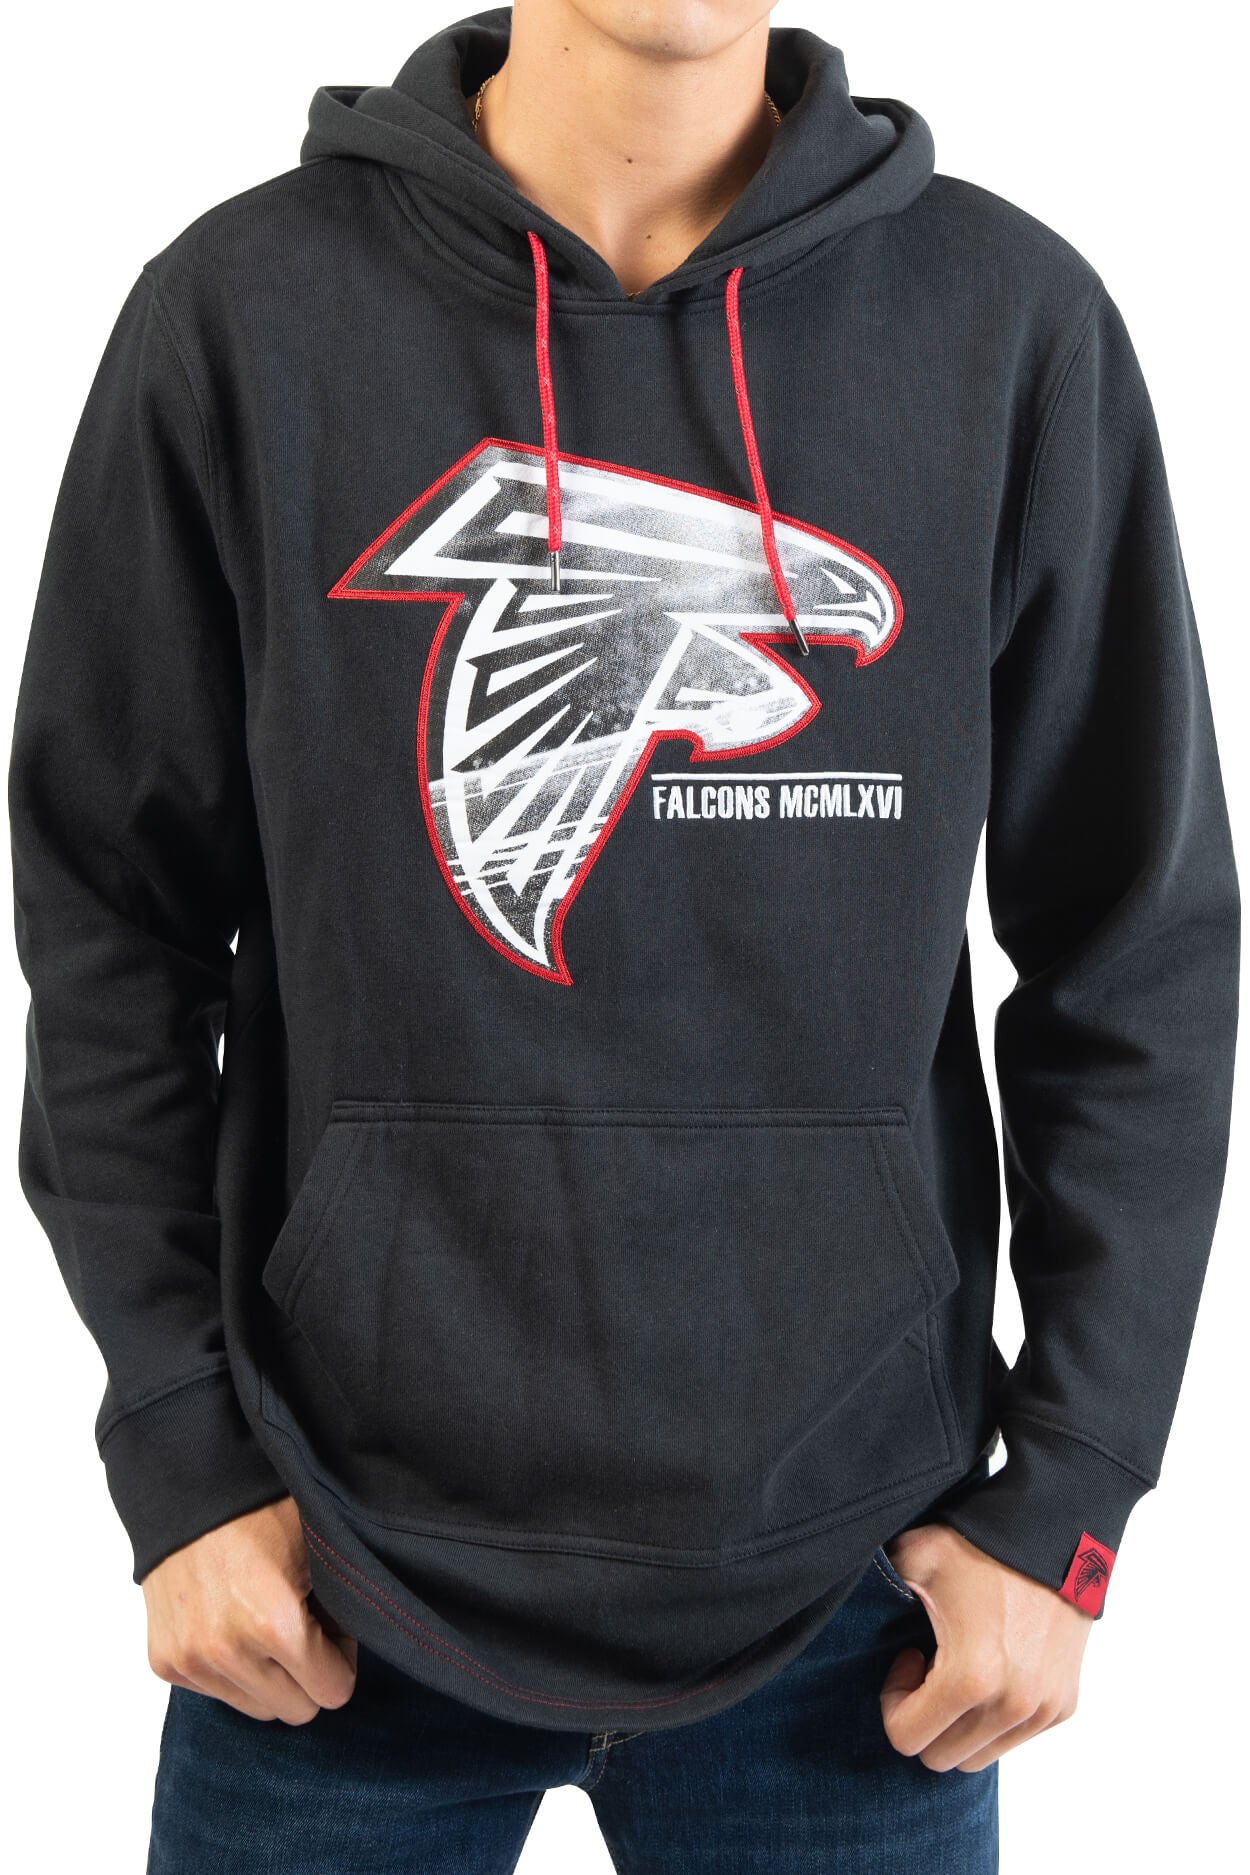 NFL Atlanta Falcons Men's Embroidered Hoodie|Atlanta Falcons